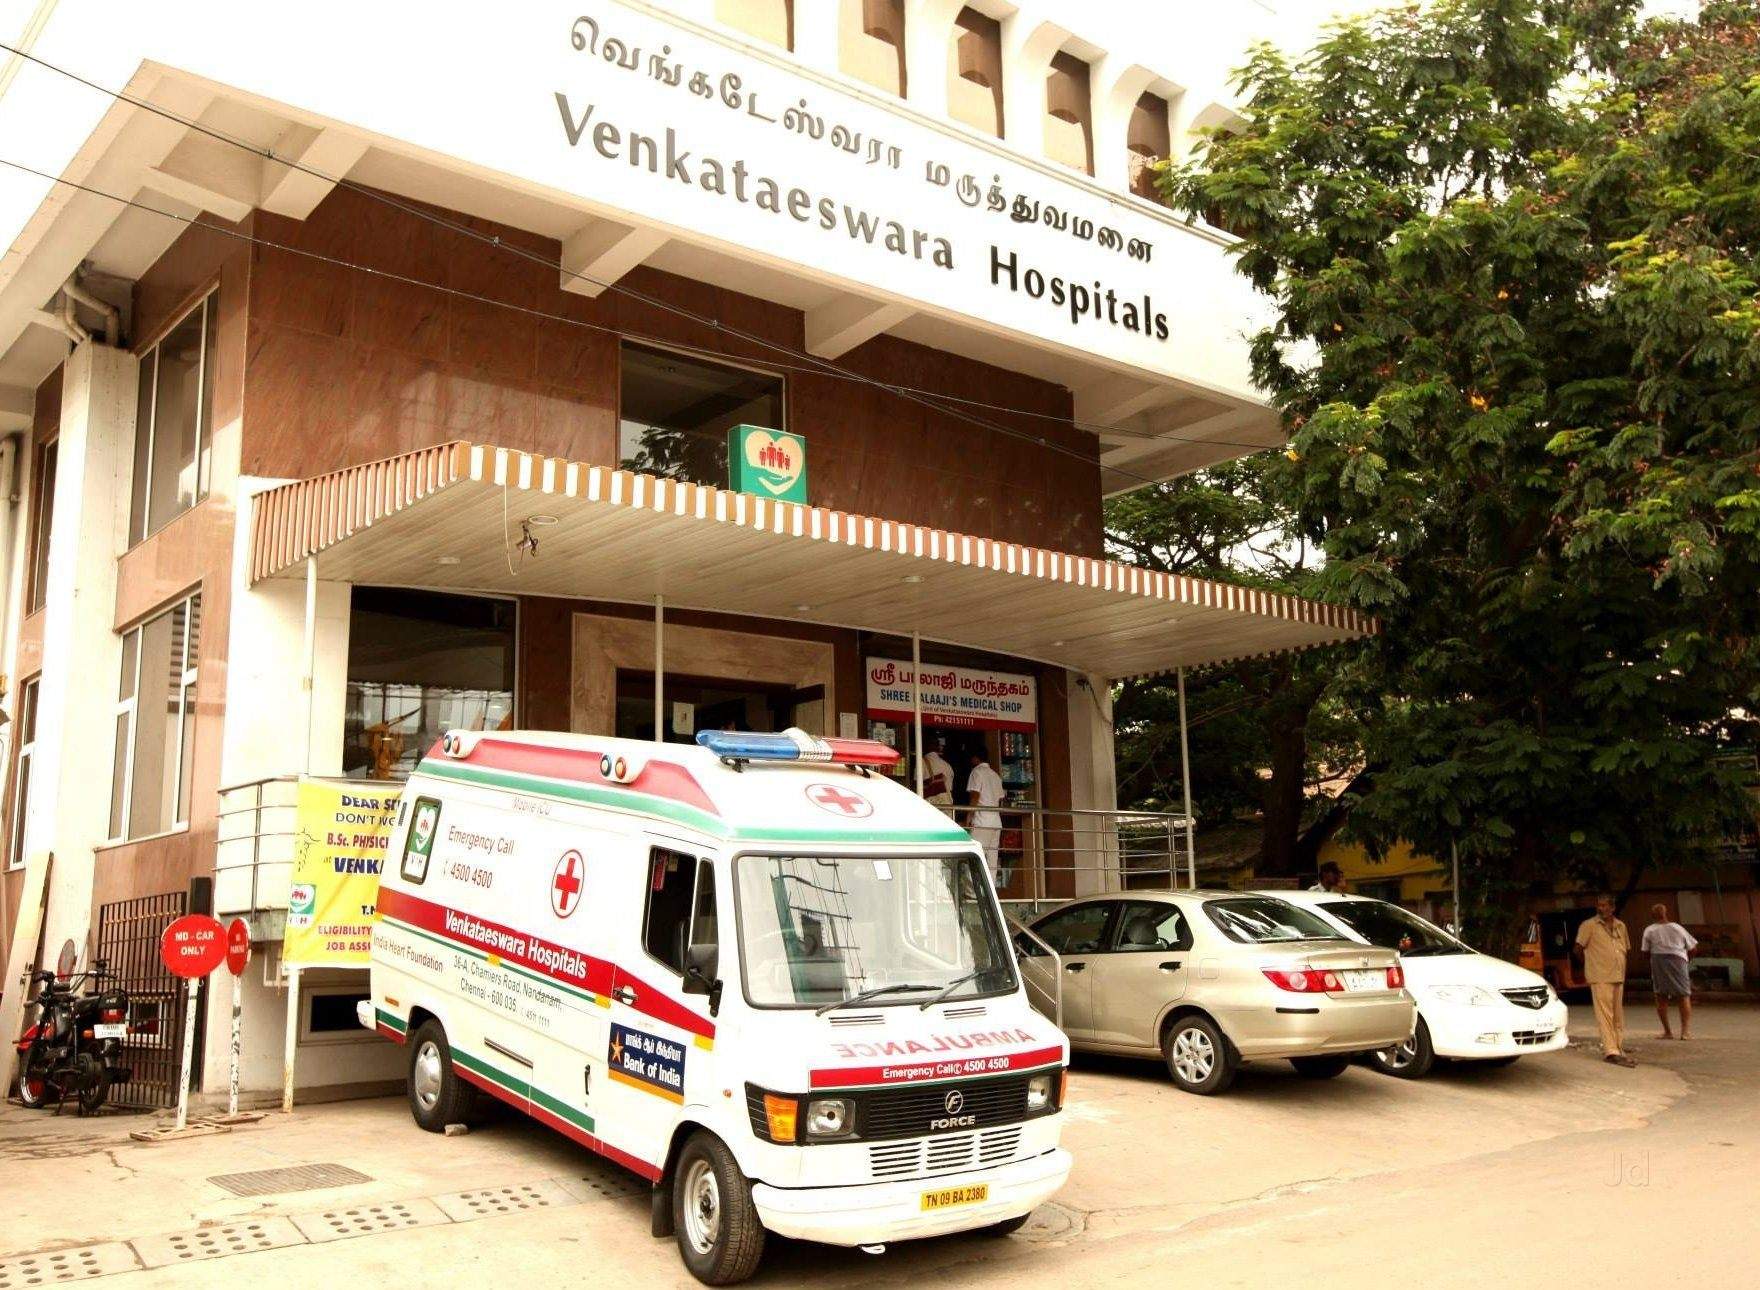 Venkataeswara Hospitals, Chennai Image